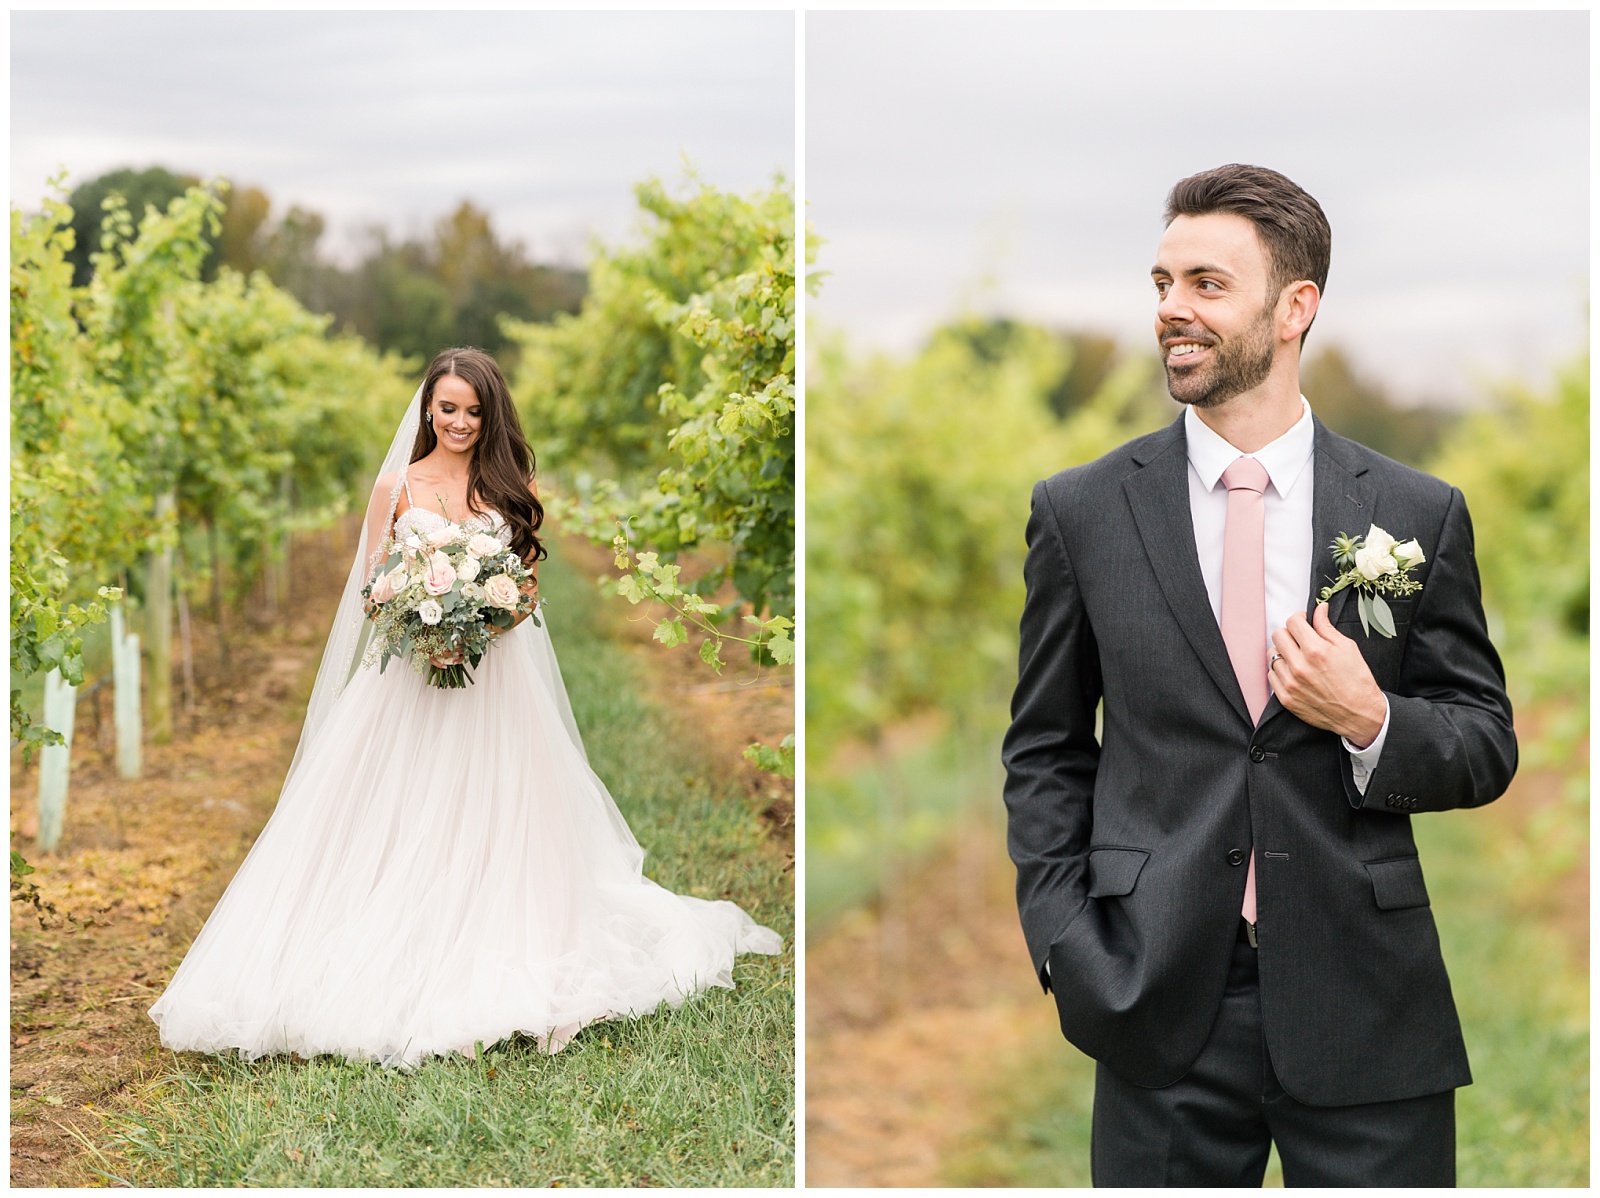 individual portraits of bride and groom. Photo taken by jenn eddine photography, a greensboro north carolina wedding photographer